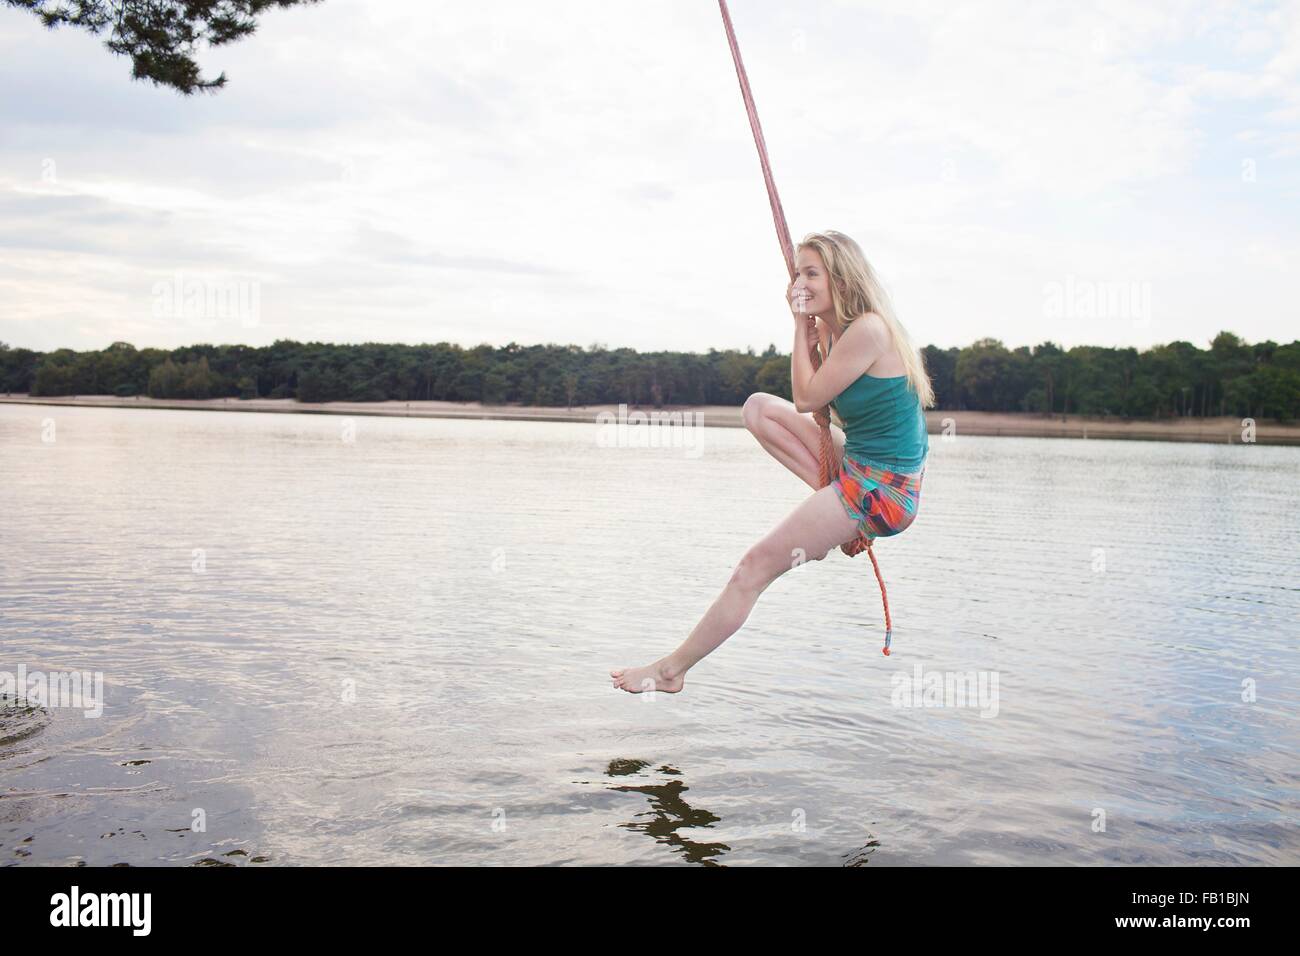 Junge Frau Seil schwingen über See Stockfotografie - Alamy